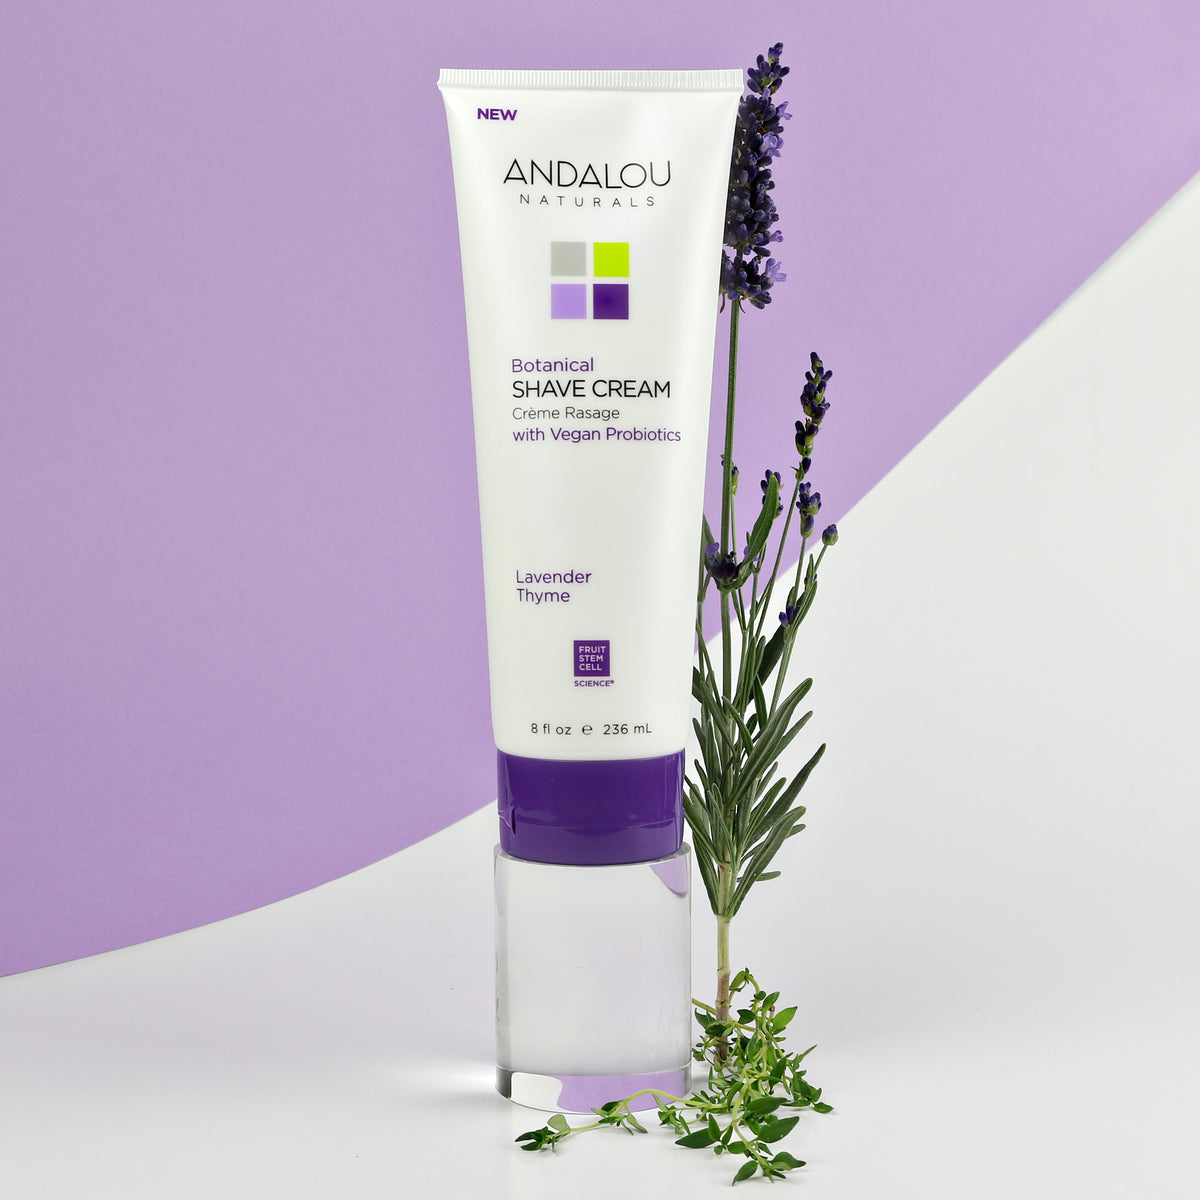 Botanical Shave Cream - Lavender Thyme - Andalou Naturals US